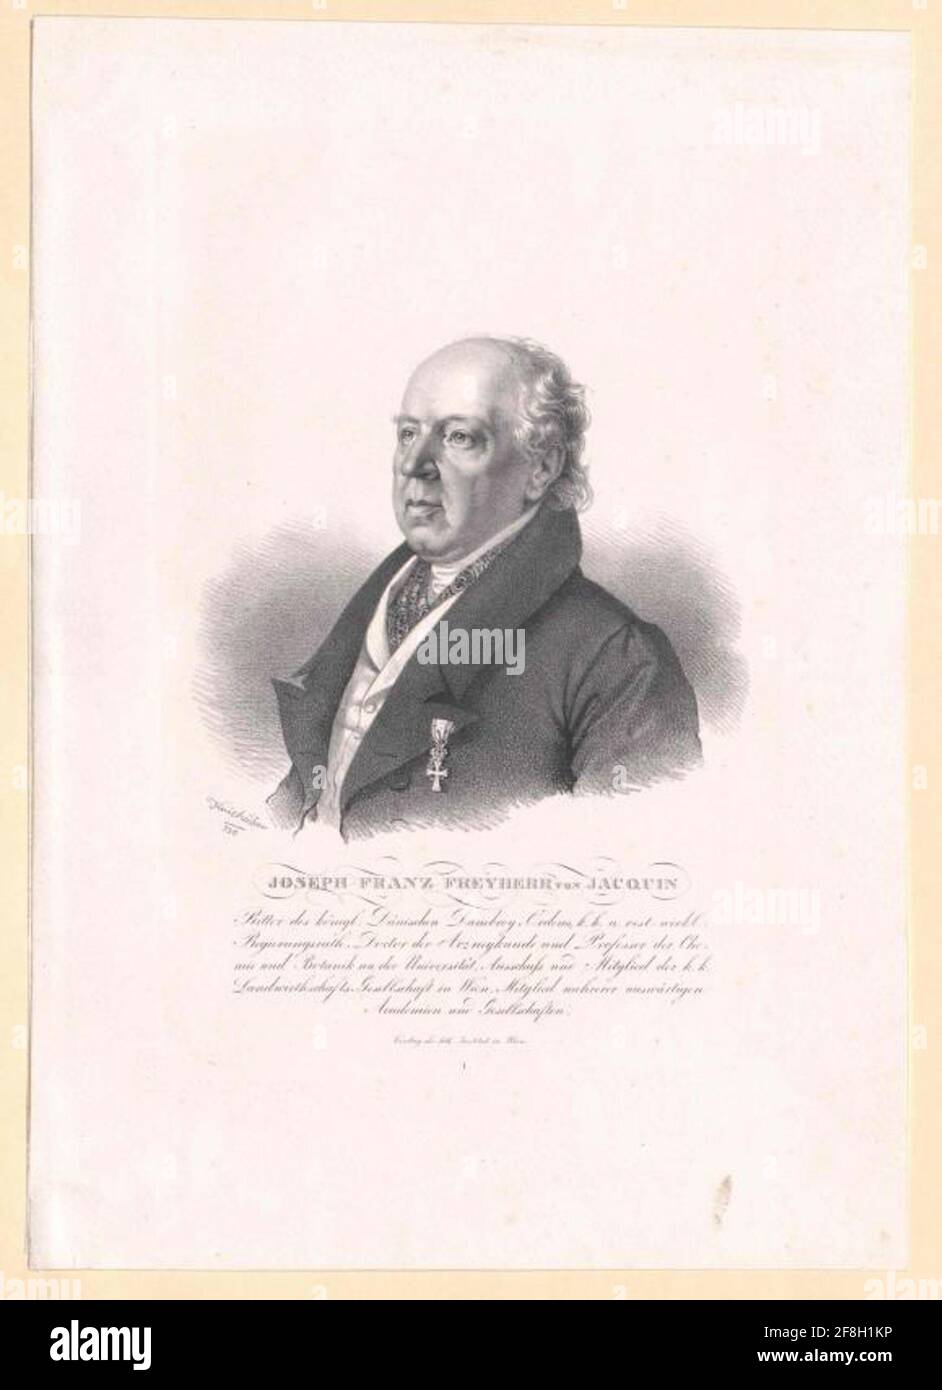 Jacquin, Joseph Franz Freiherr. Stock Photo